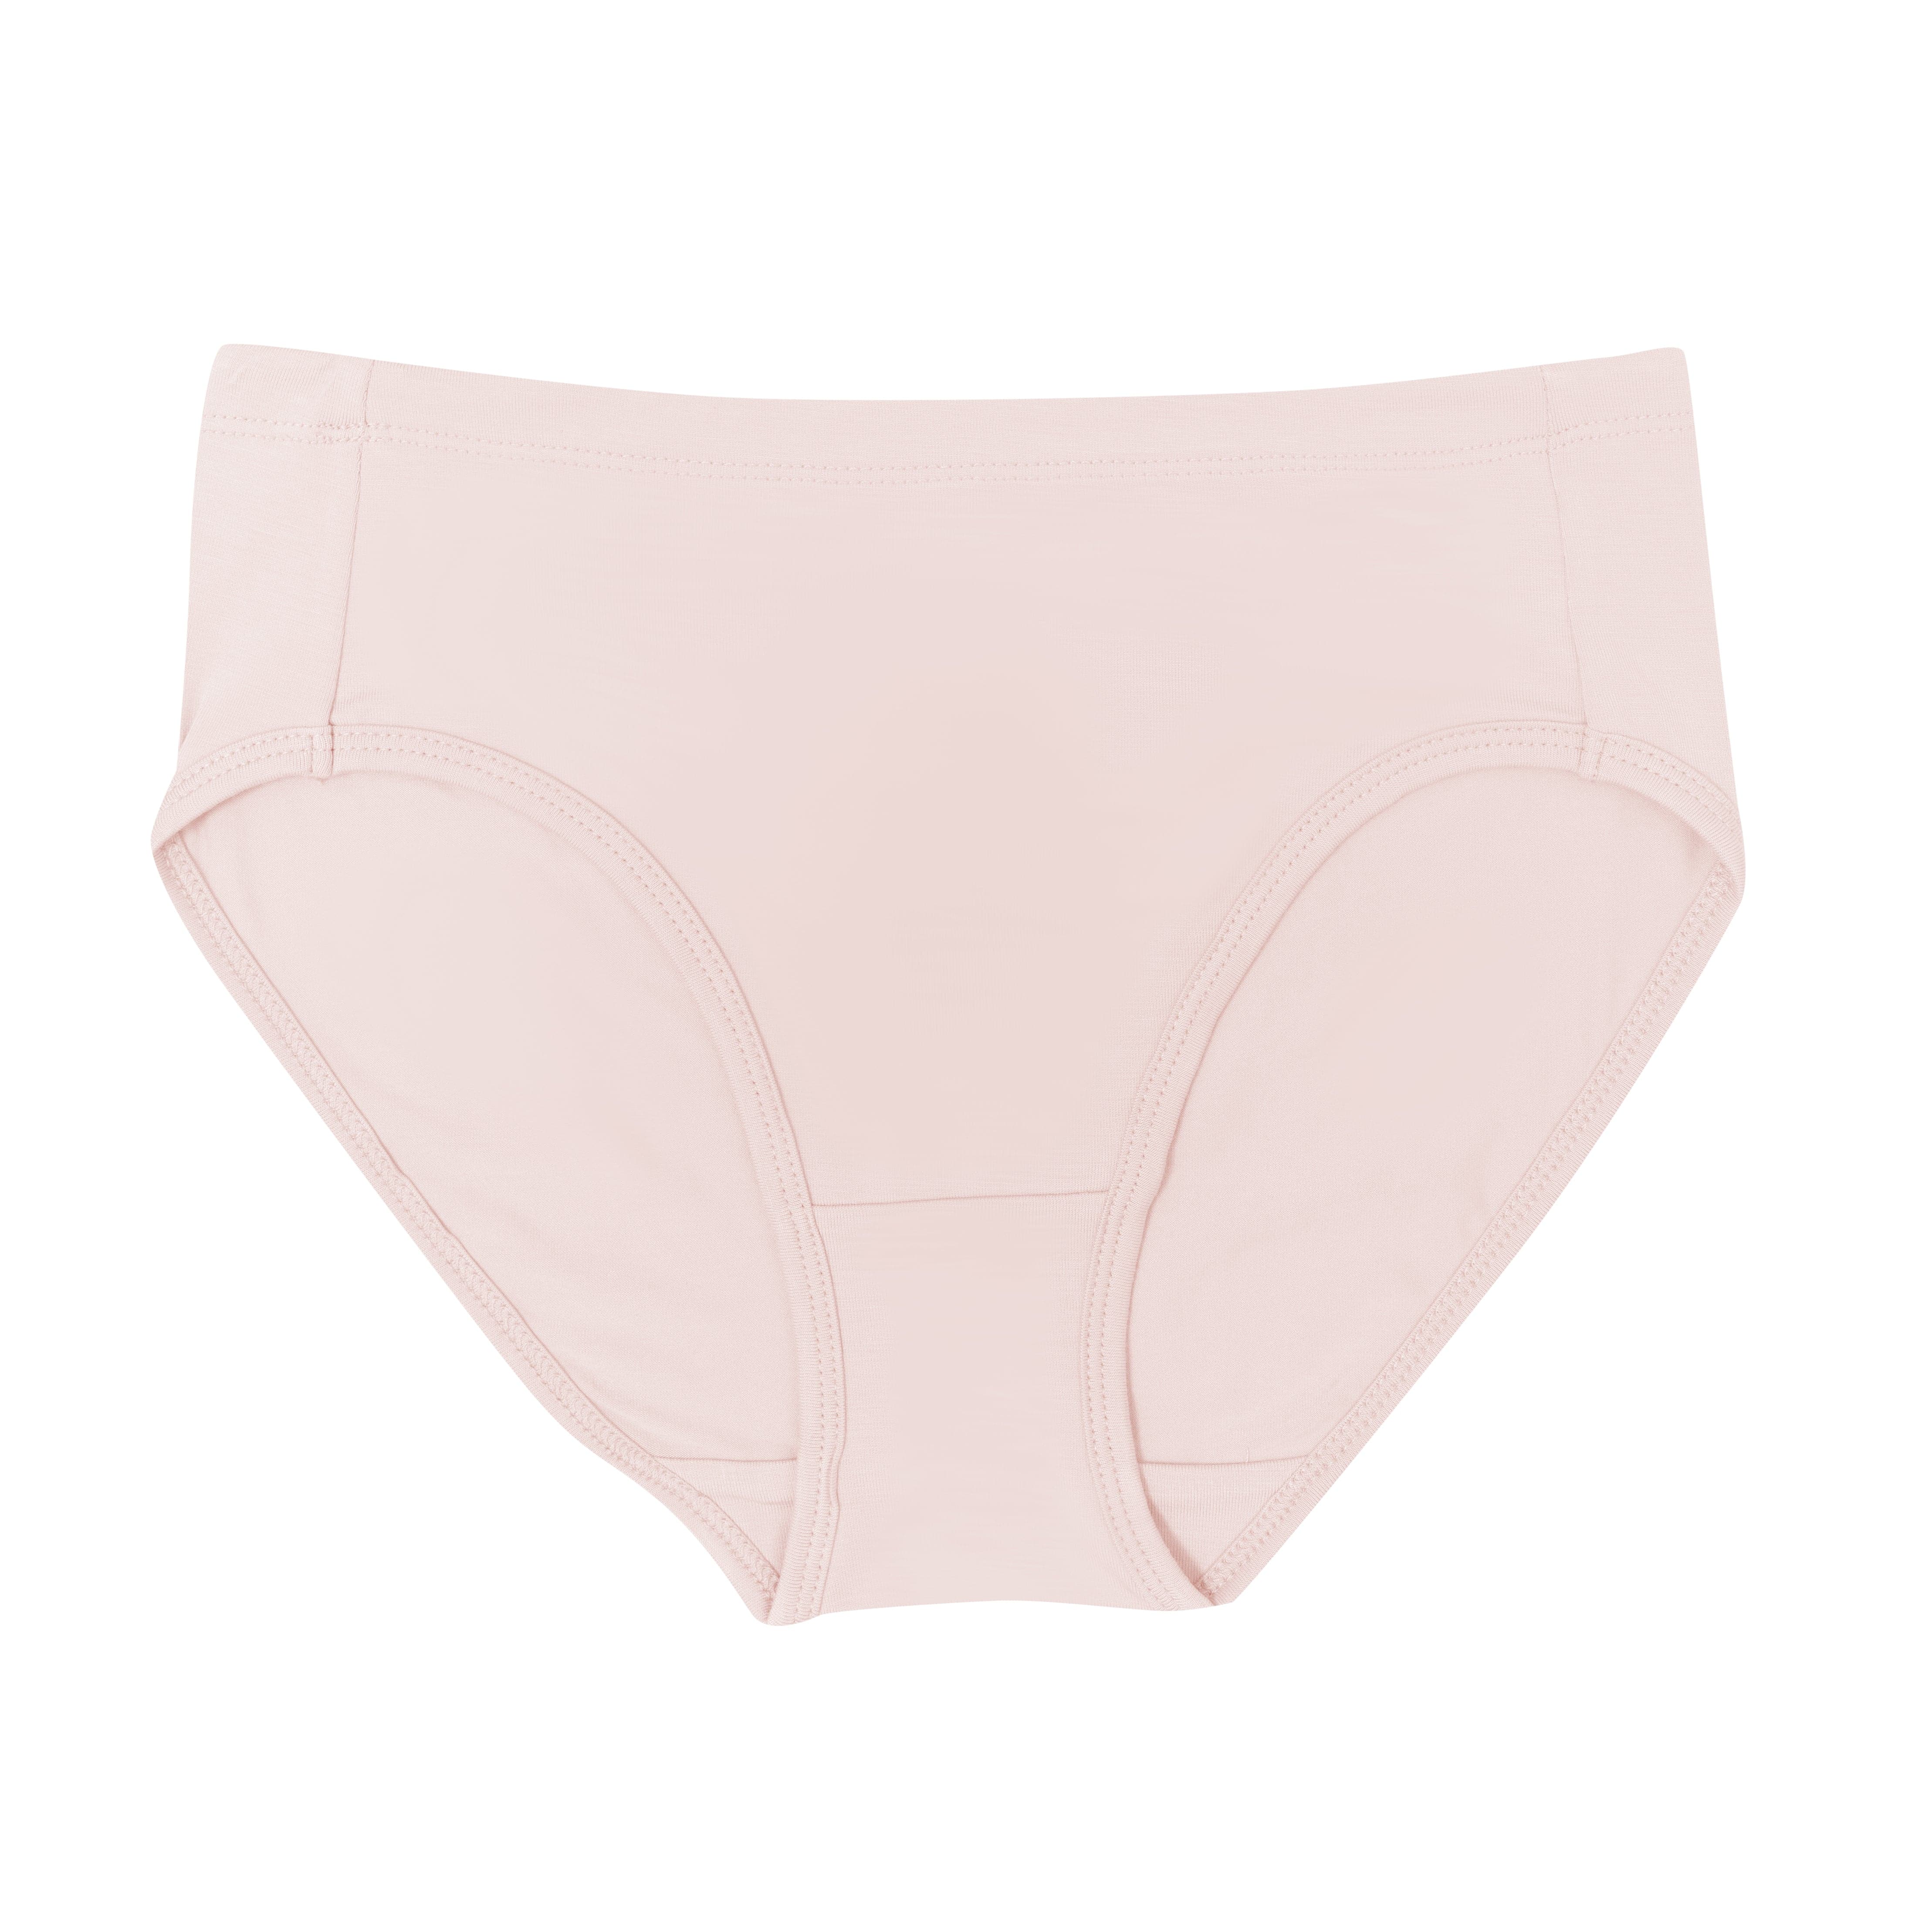 Kyte BABY Women's Underwear Women’s Underwear in Blush